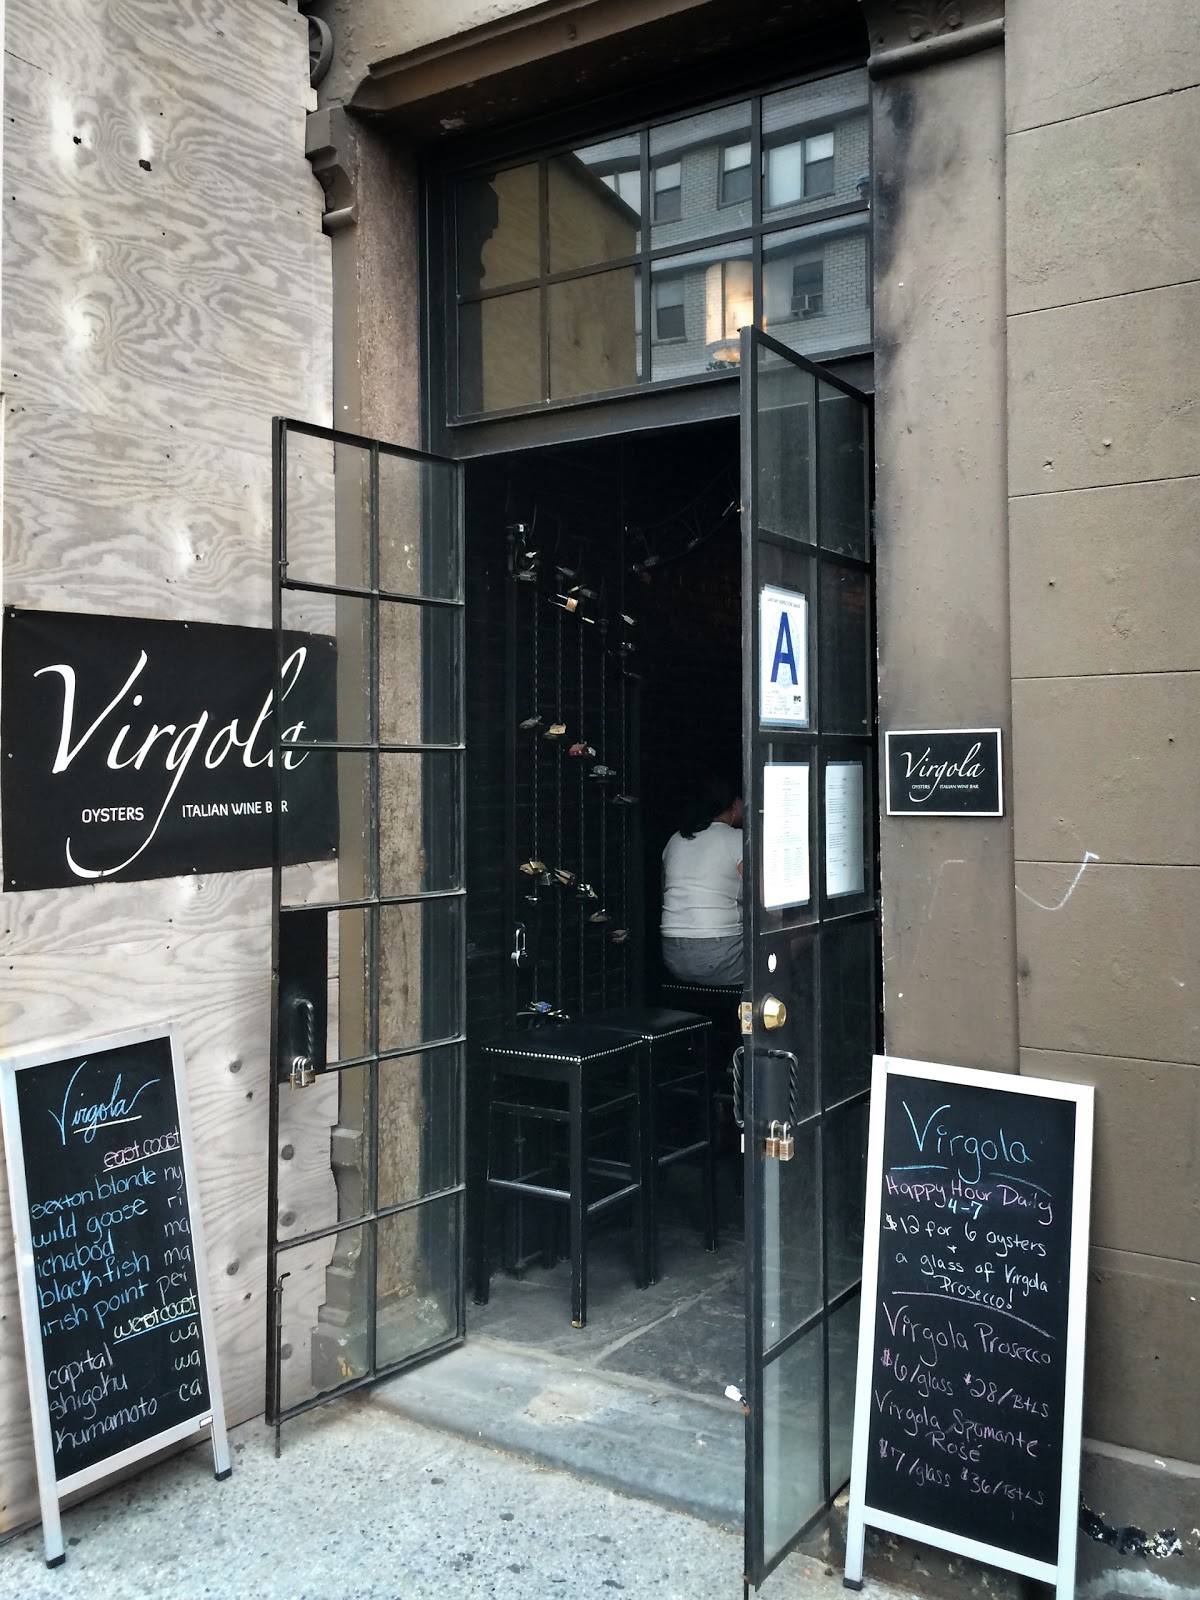 Photo of Virgola in New York City, New York, United States - 4 Picture of Restaurant, Food, Point of interest, Establishment, Bar